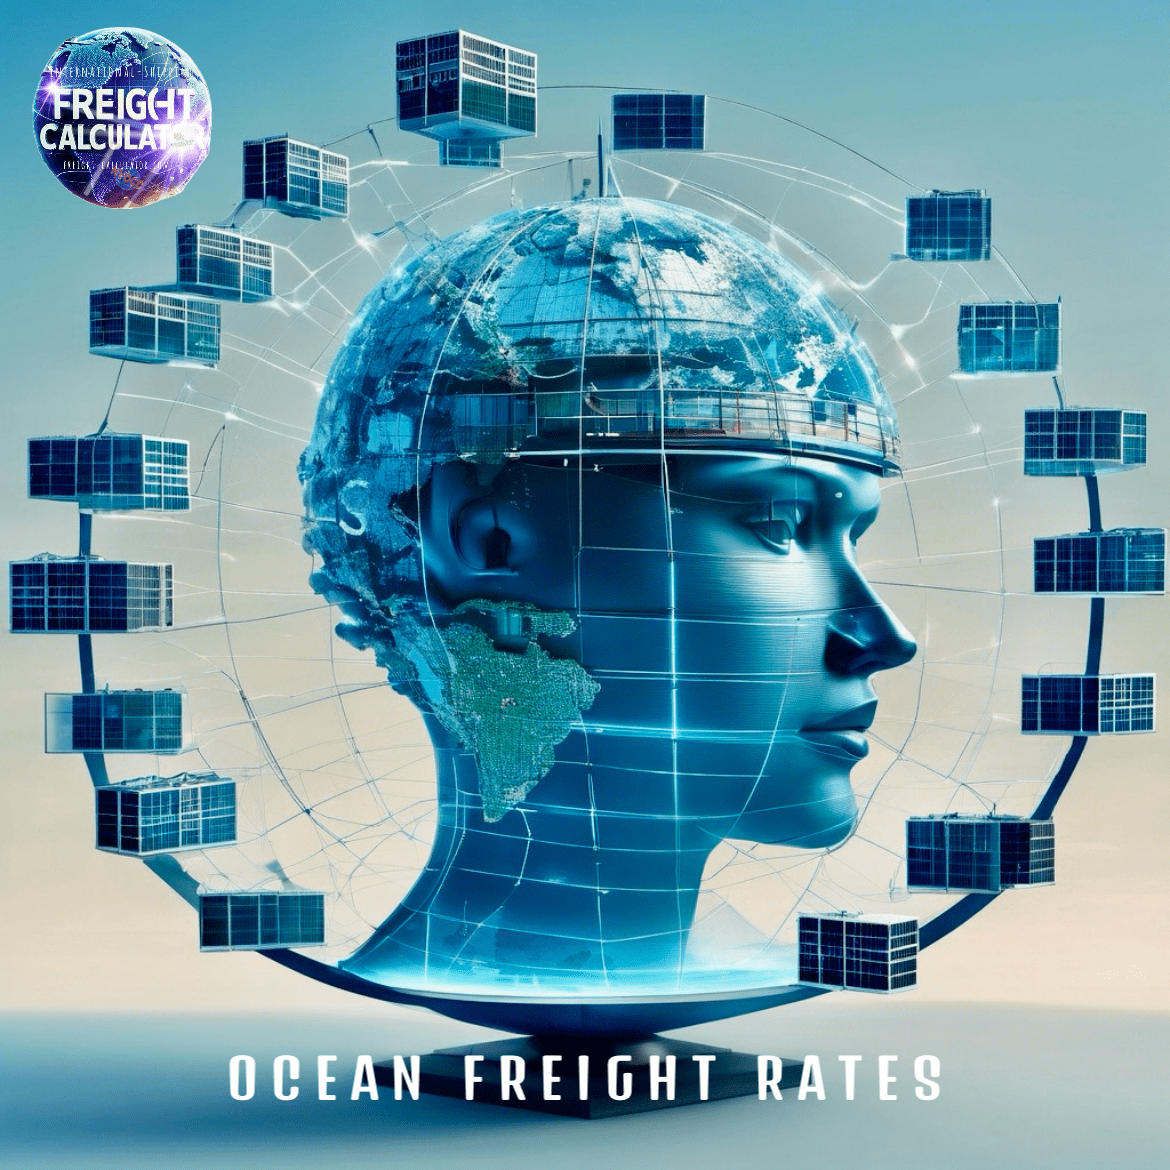 Freight Forwarder Shipping Estimate